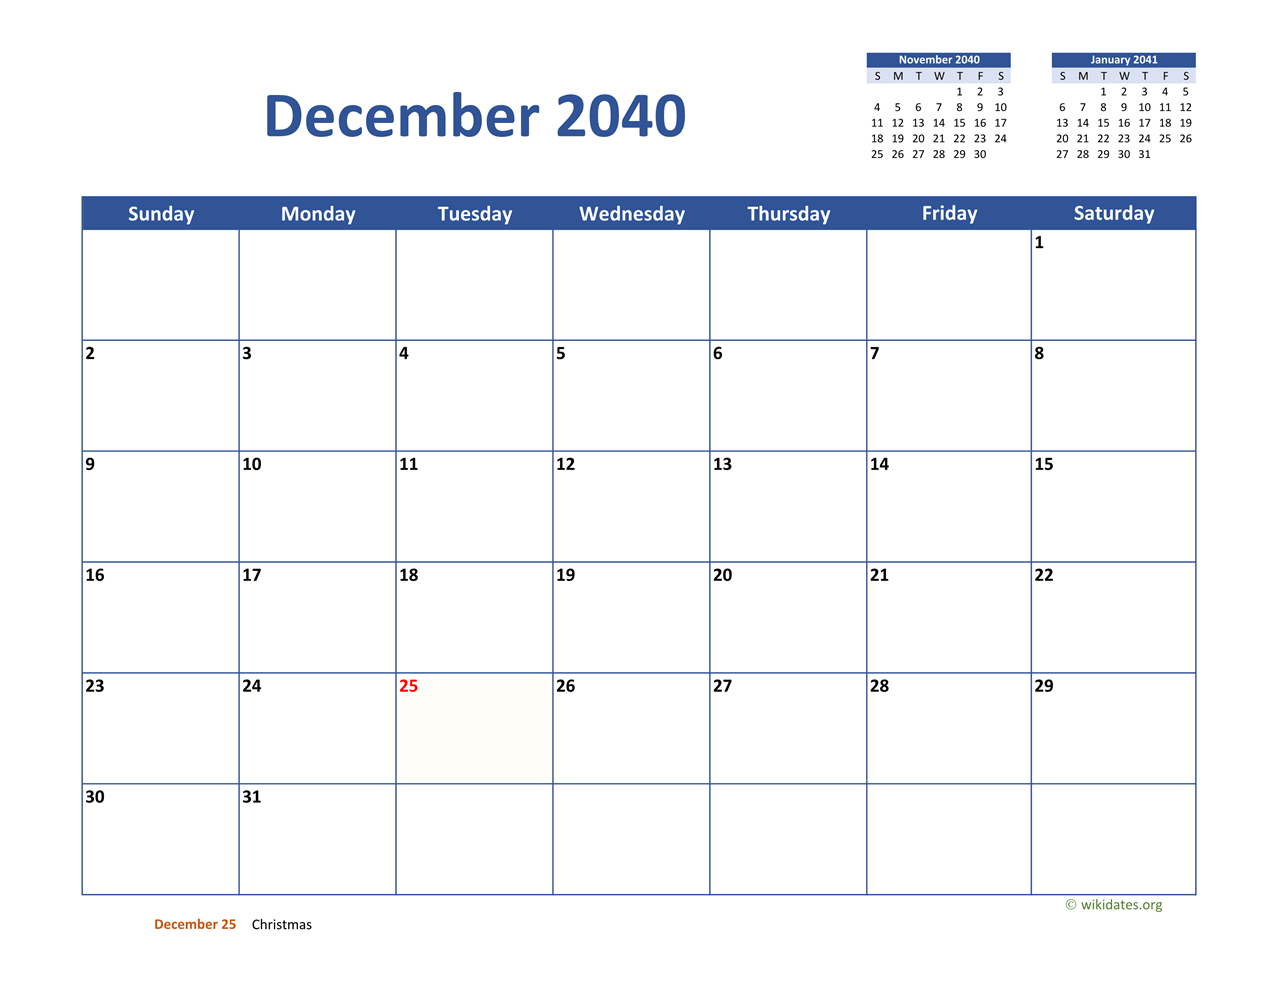 December 2040 Calendar Classic | WikiDates.org